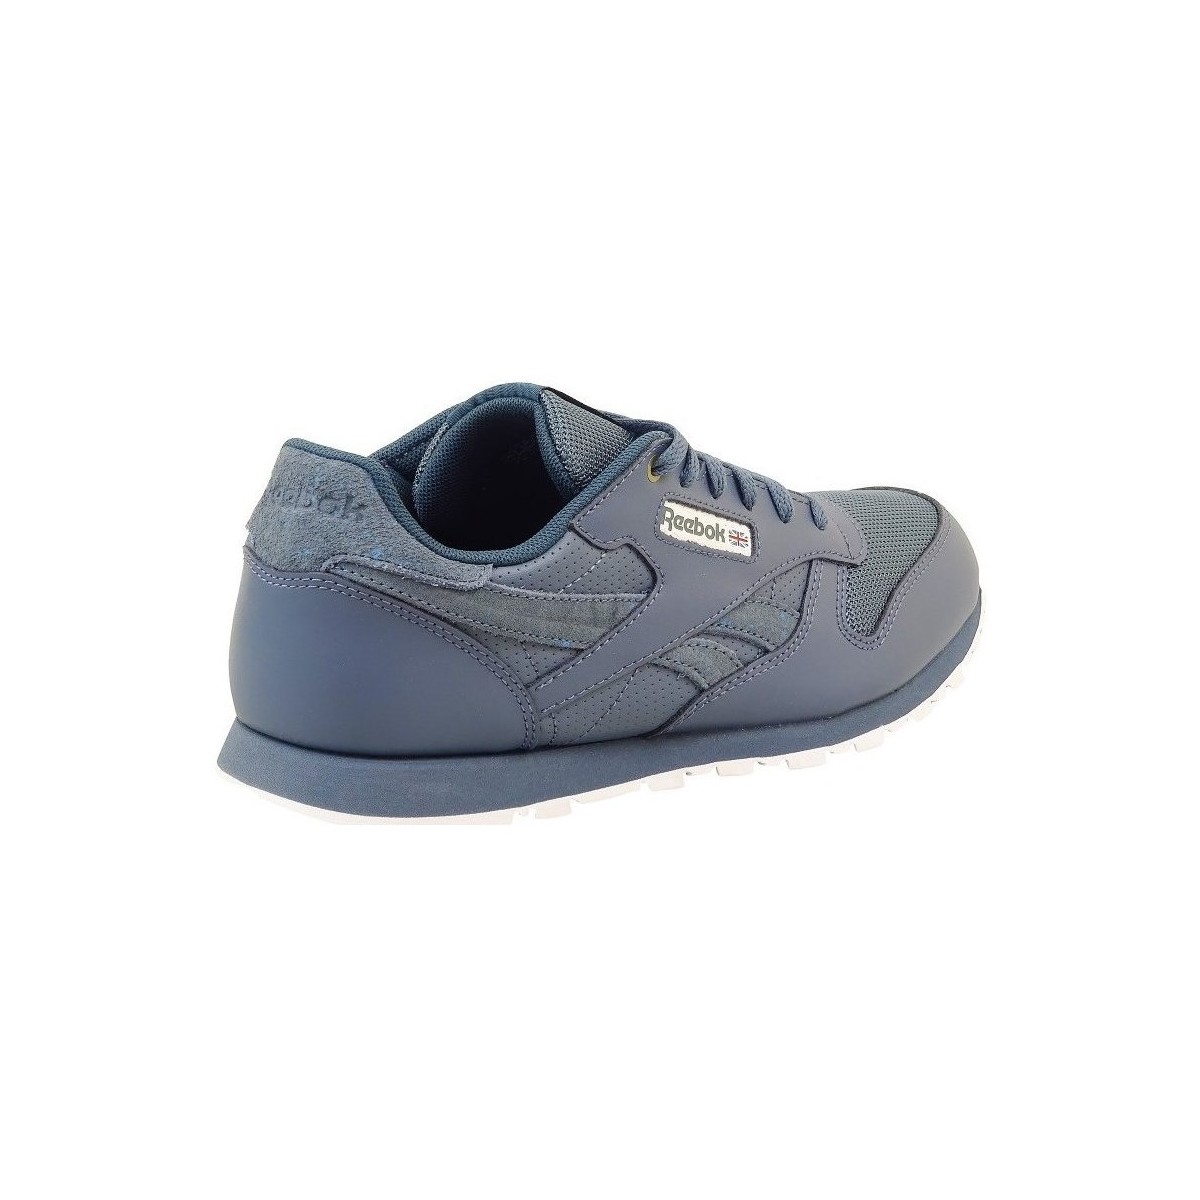 Schuhe Kinder Sneaker Low Reebok Sport Classic Leather Deep Grau